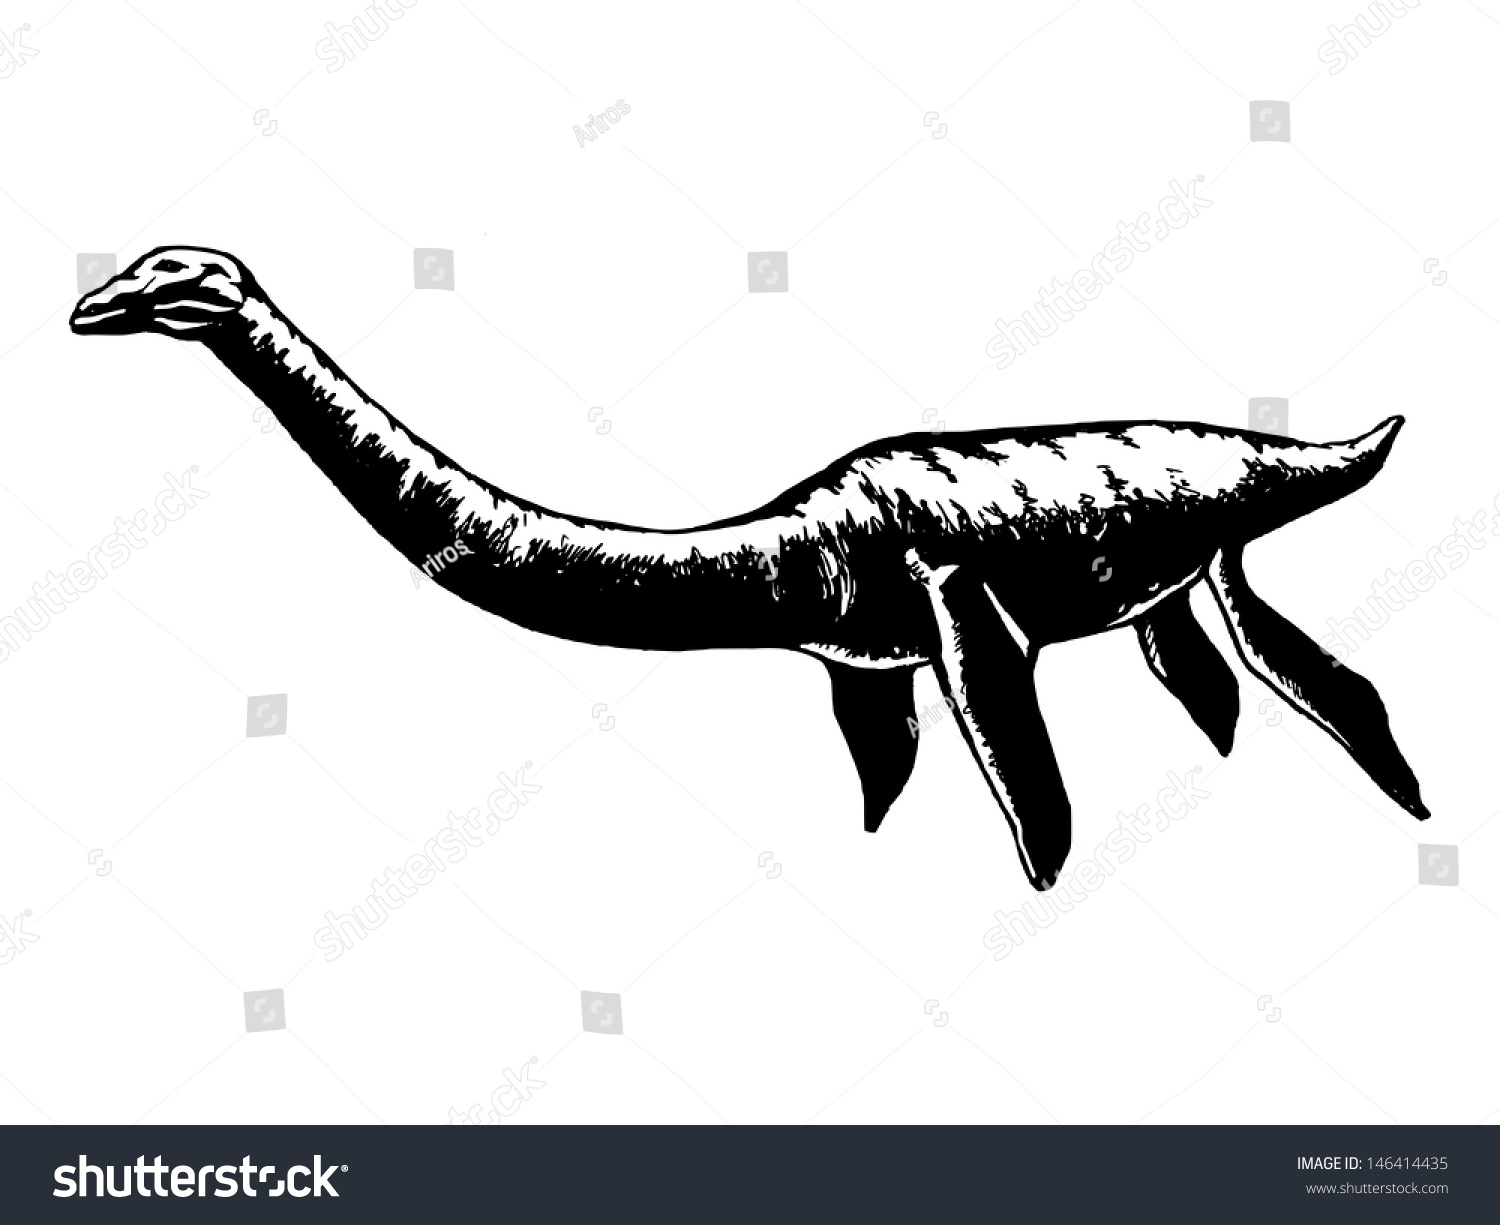 Hand Drawn, Vector, Sketch Illustration Of Plesiosaurus 146414435